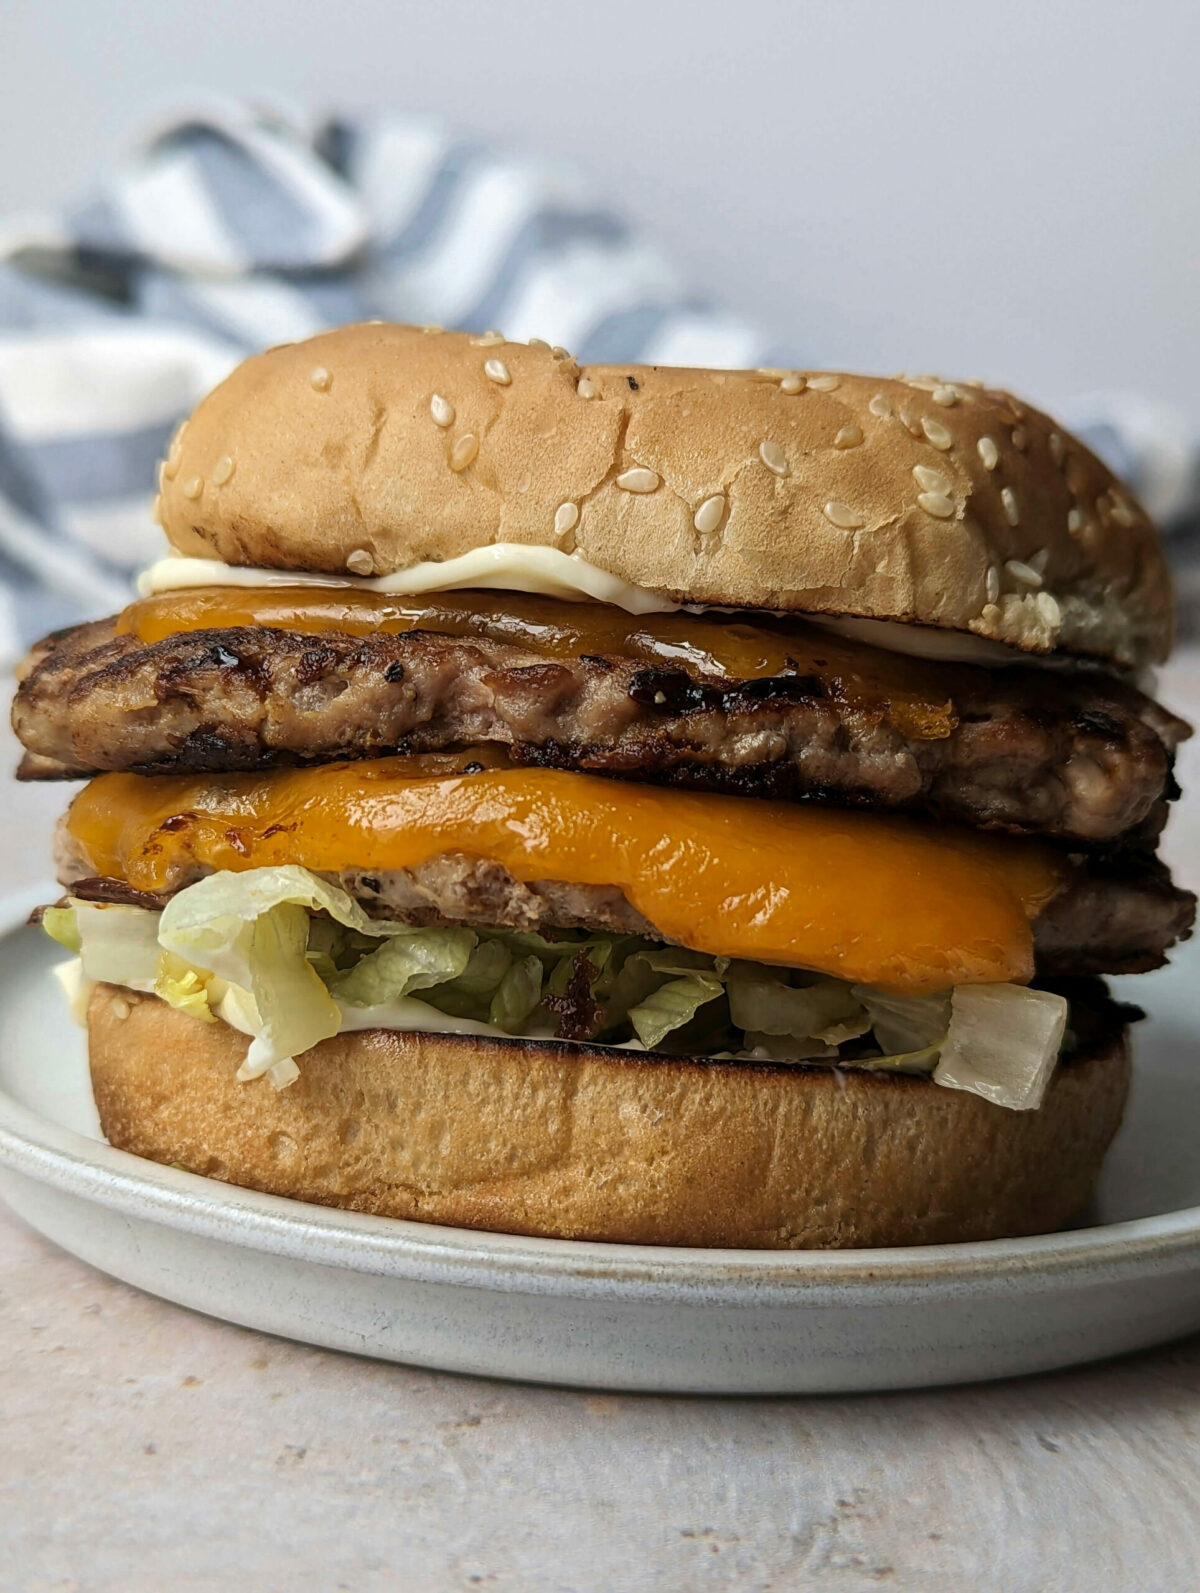 A close up of a double decker turkey smash burgers.